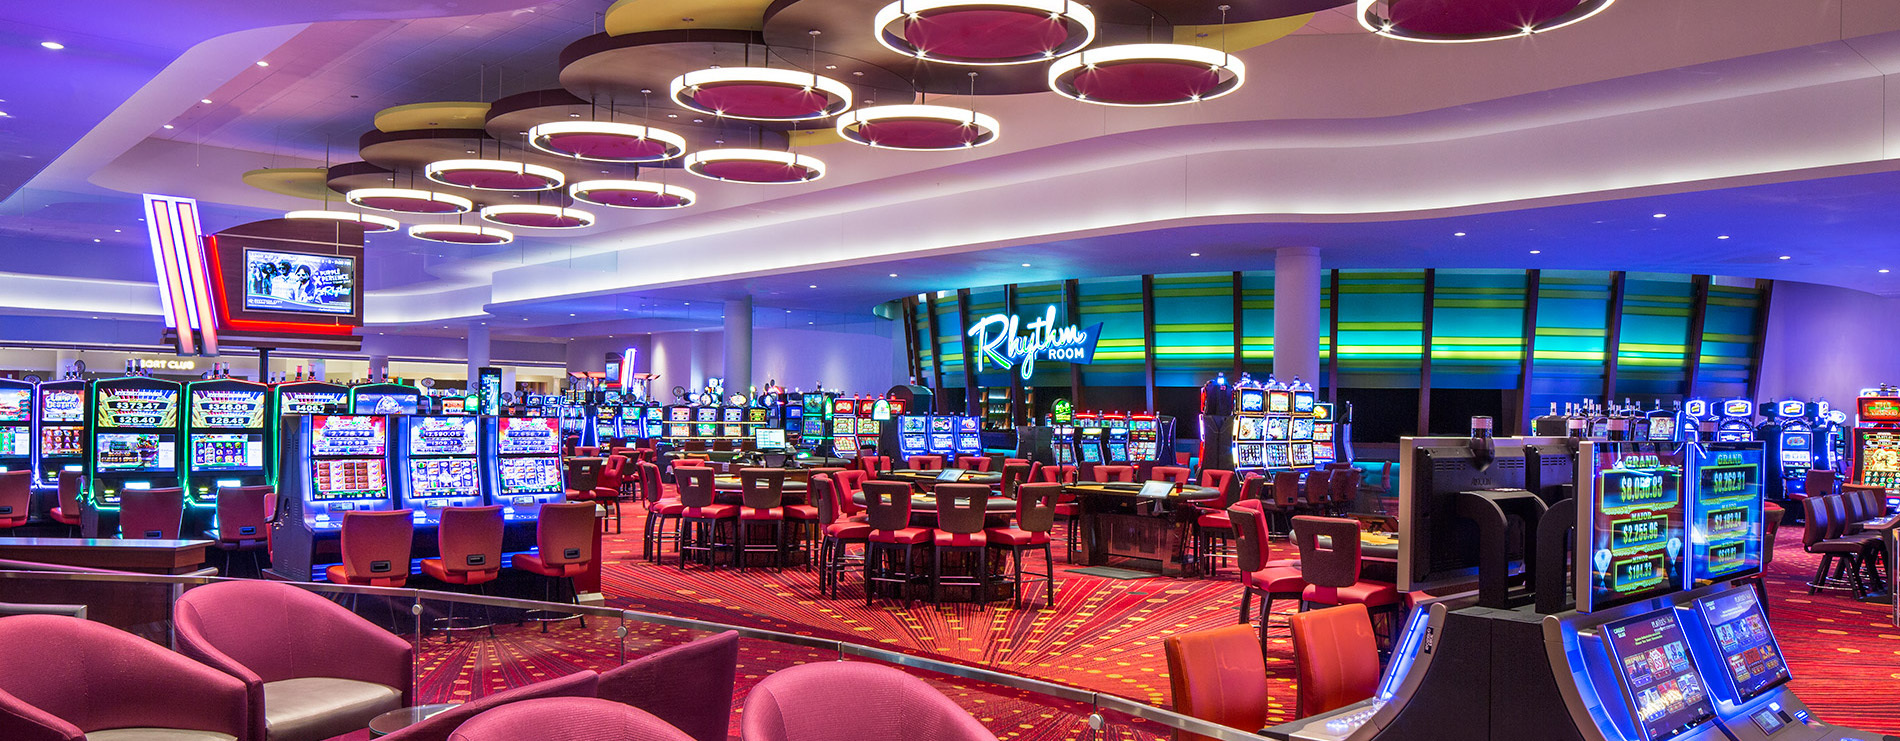 Photo of Rhythm City Casino Resort, Davenport, IA